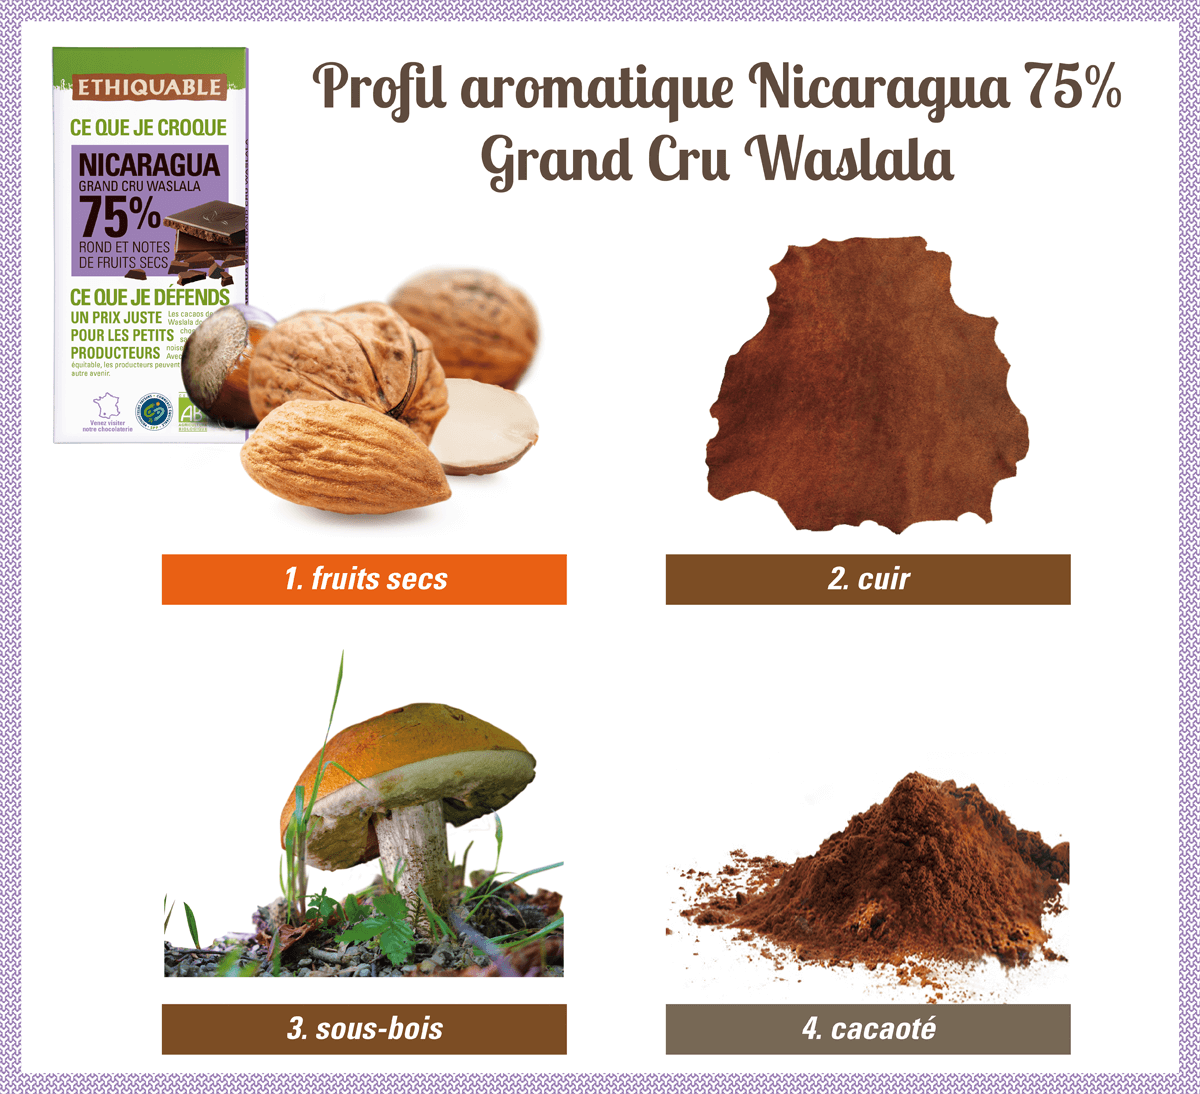 Profil aromatique chocolat noir 75% de cacao du Nicaragua Grand Cru Waslala bio et équitable